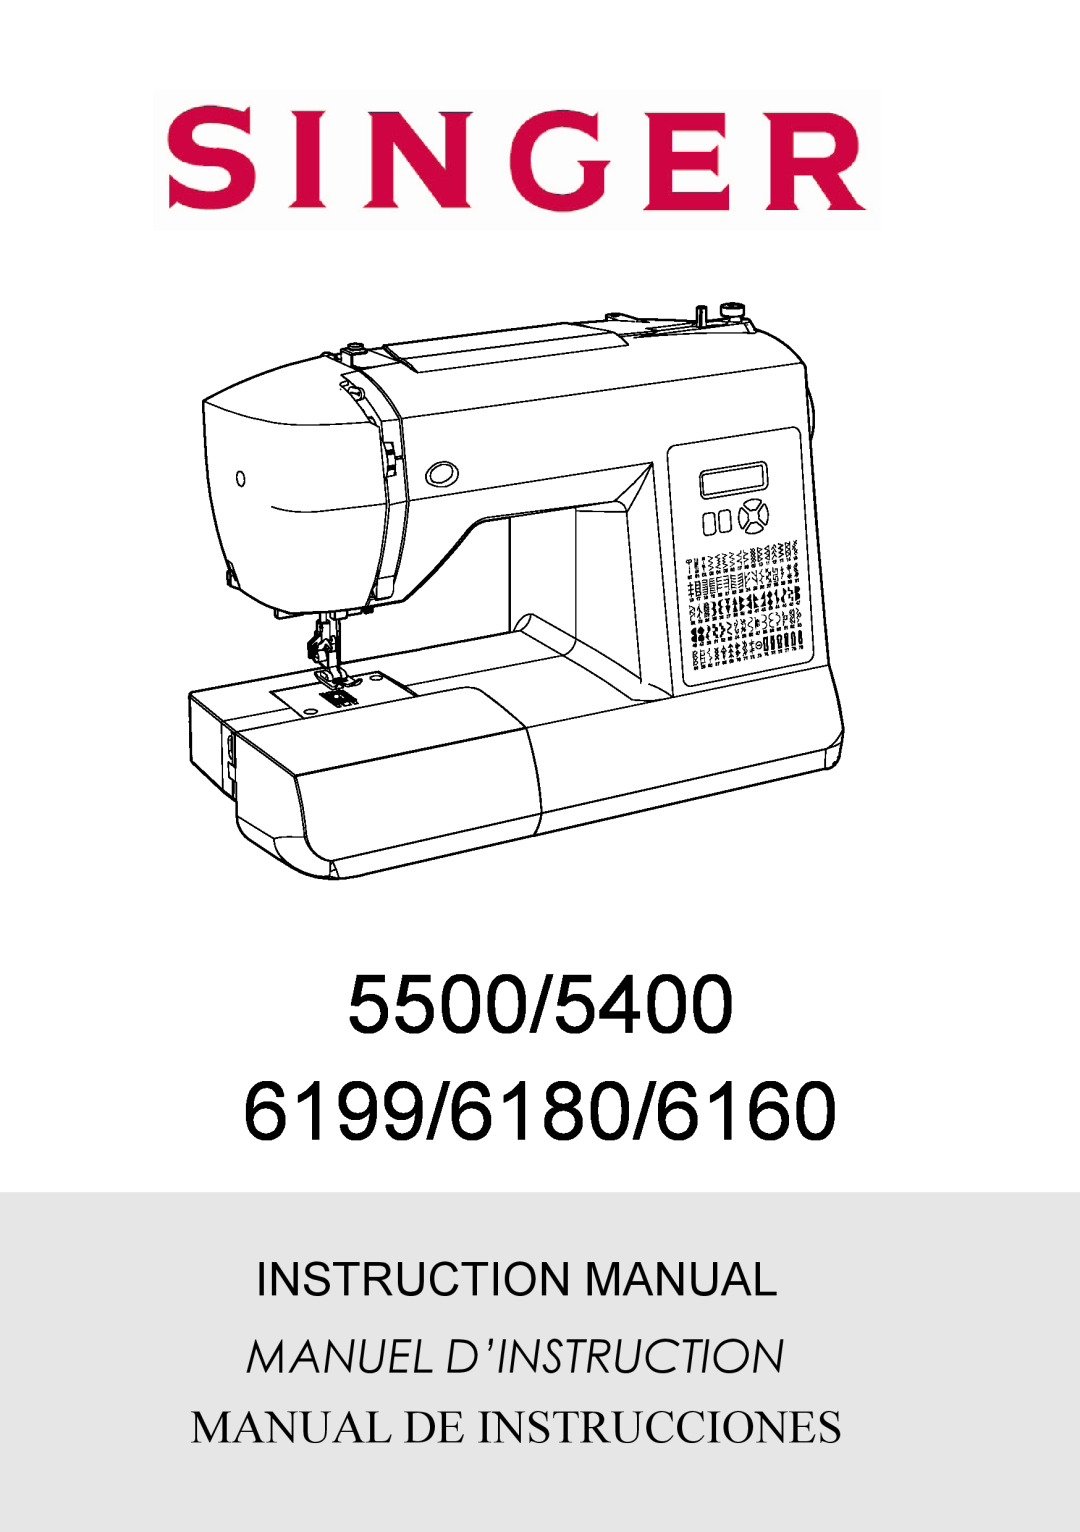 Singer instruction manual 5500 6199/6180/6160, Instruction Manual, Manuel D’Instruction, Manual De Instrucciones 